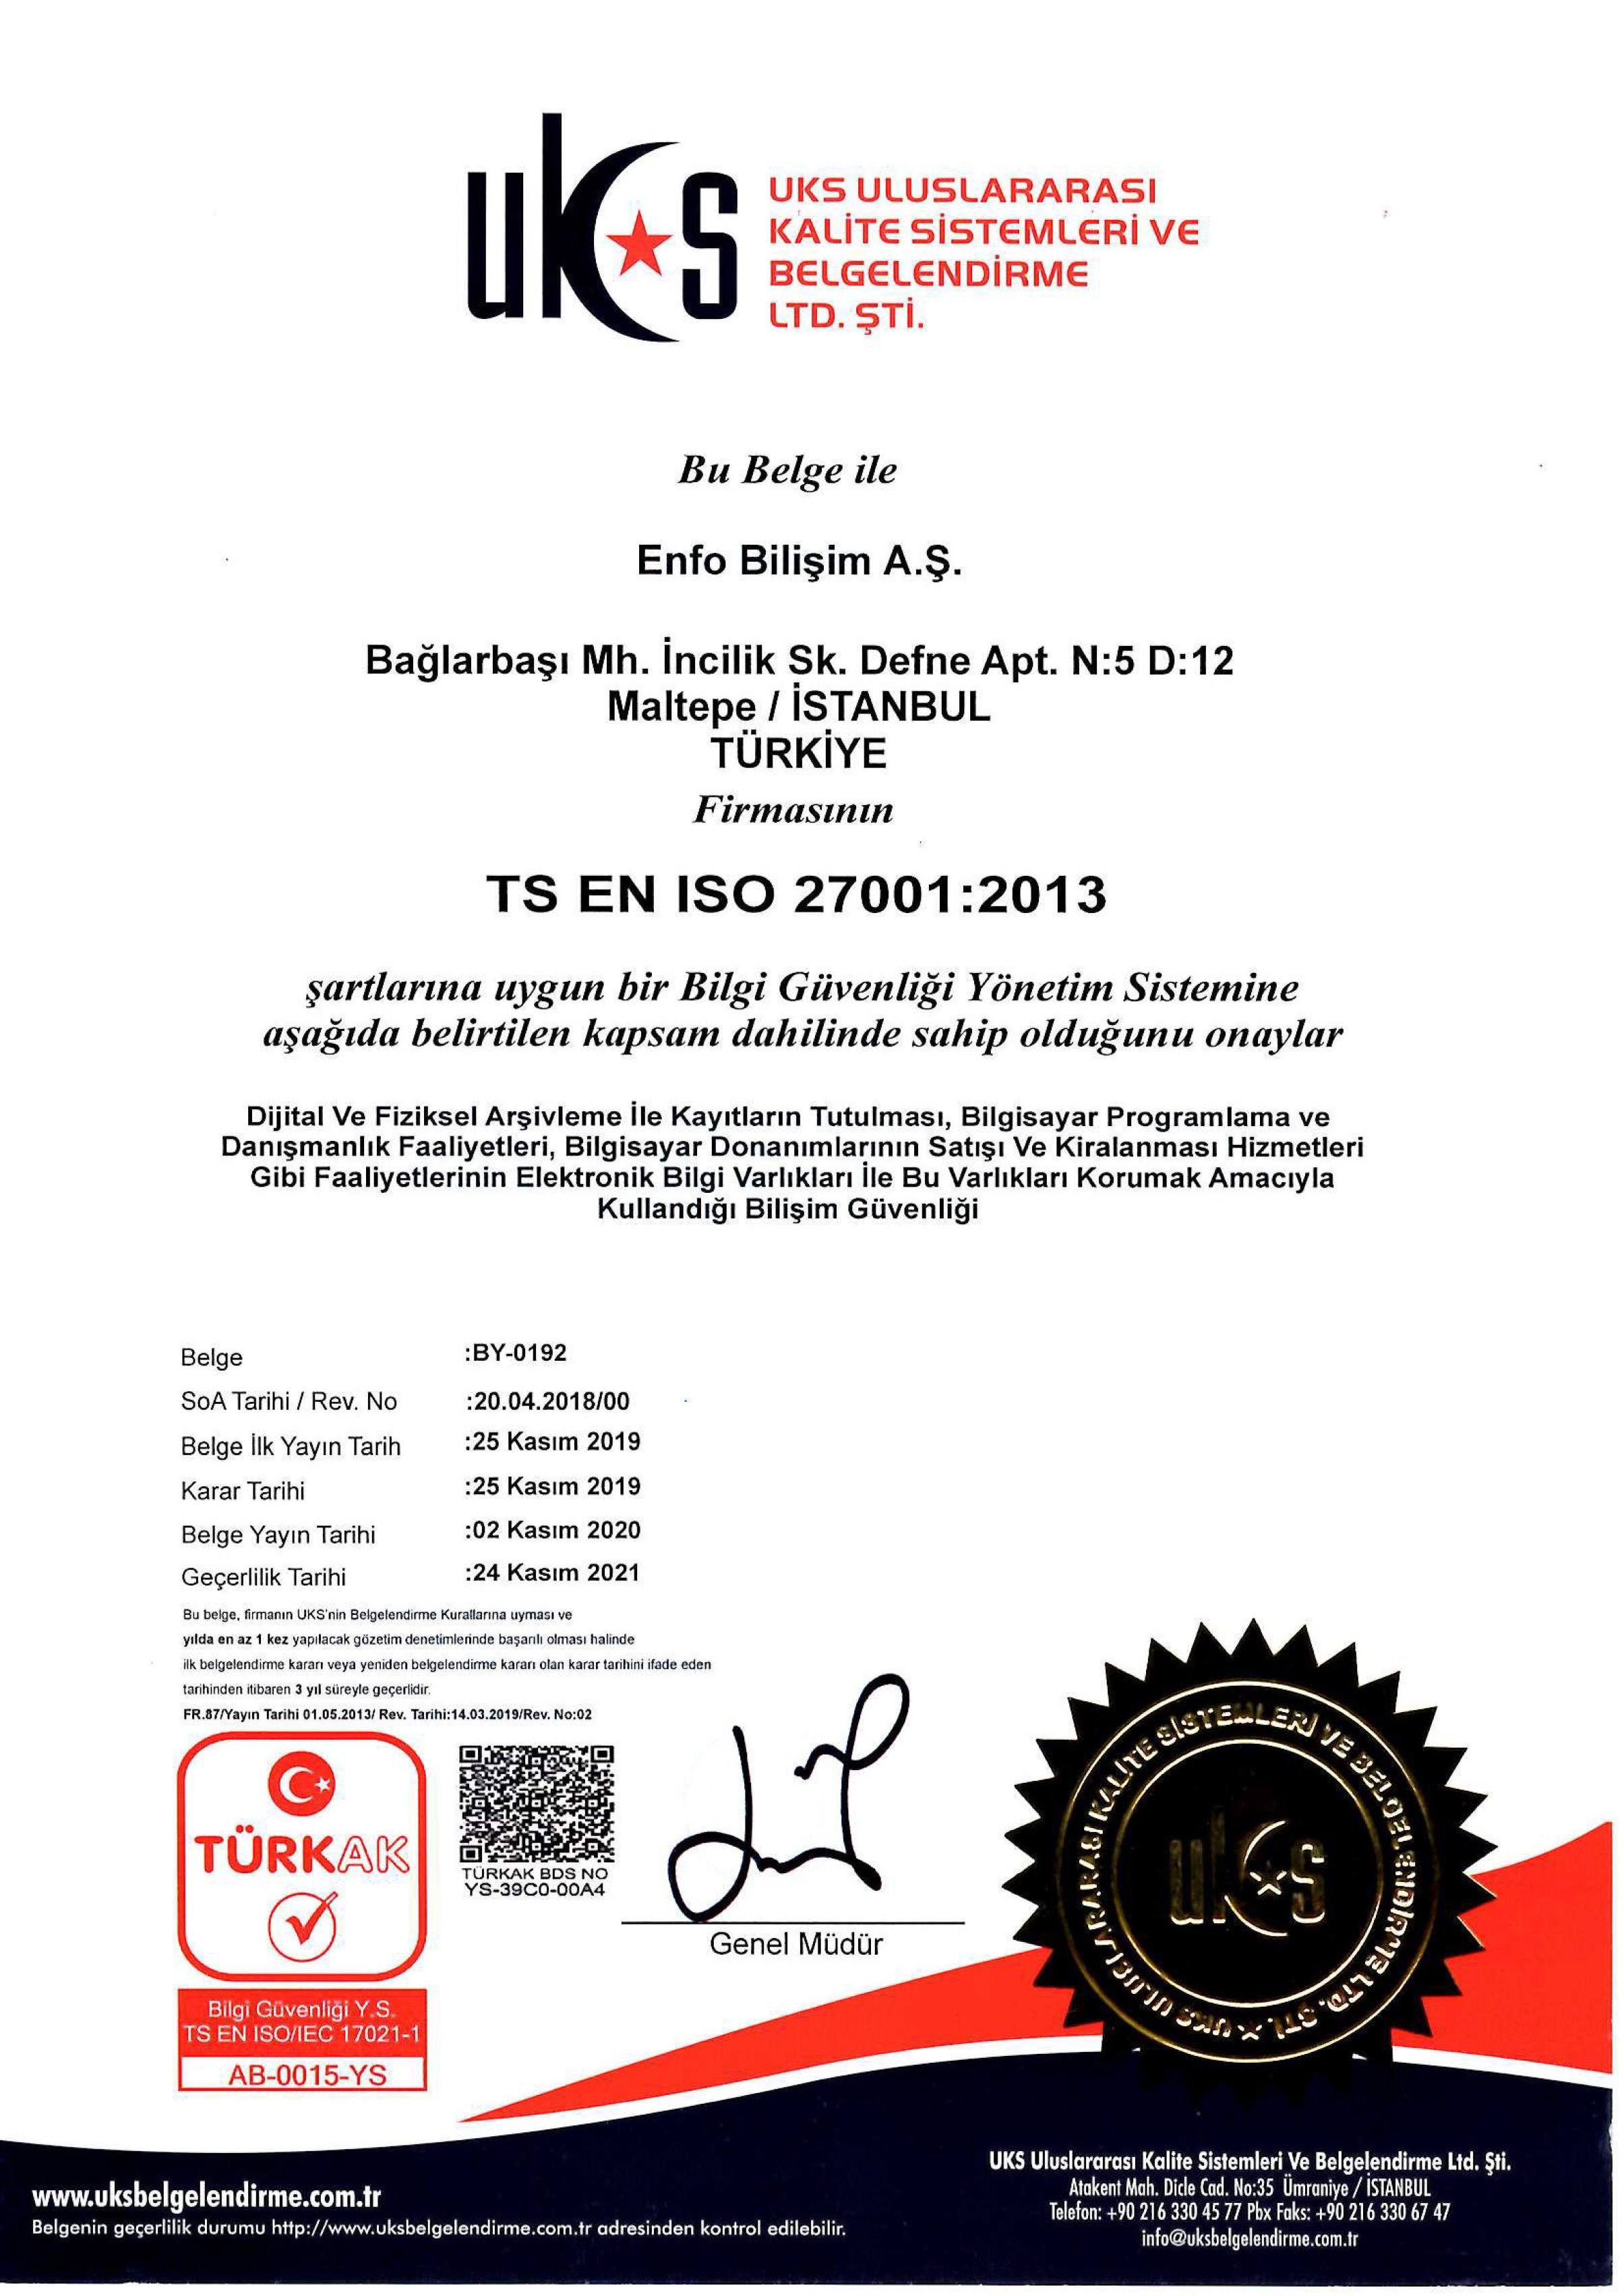 Quality Certificates | Enfo Bilişim